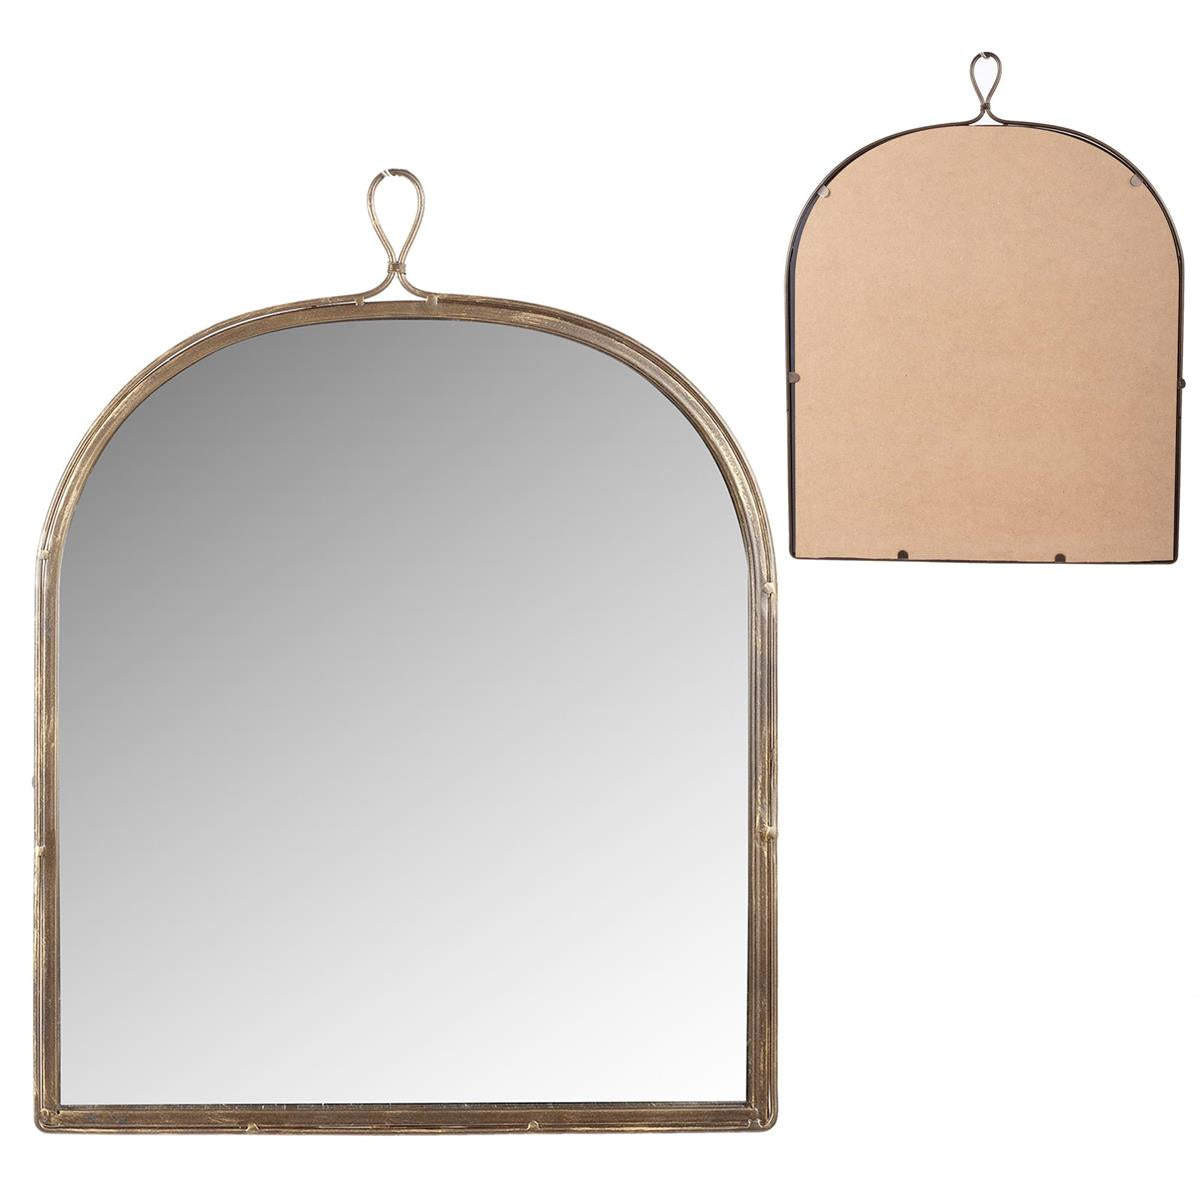 Arch mirror w/ metal frame